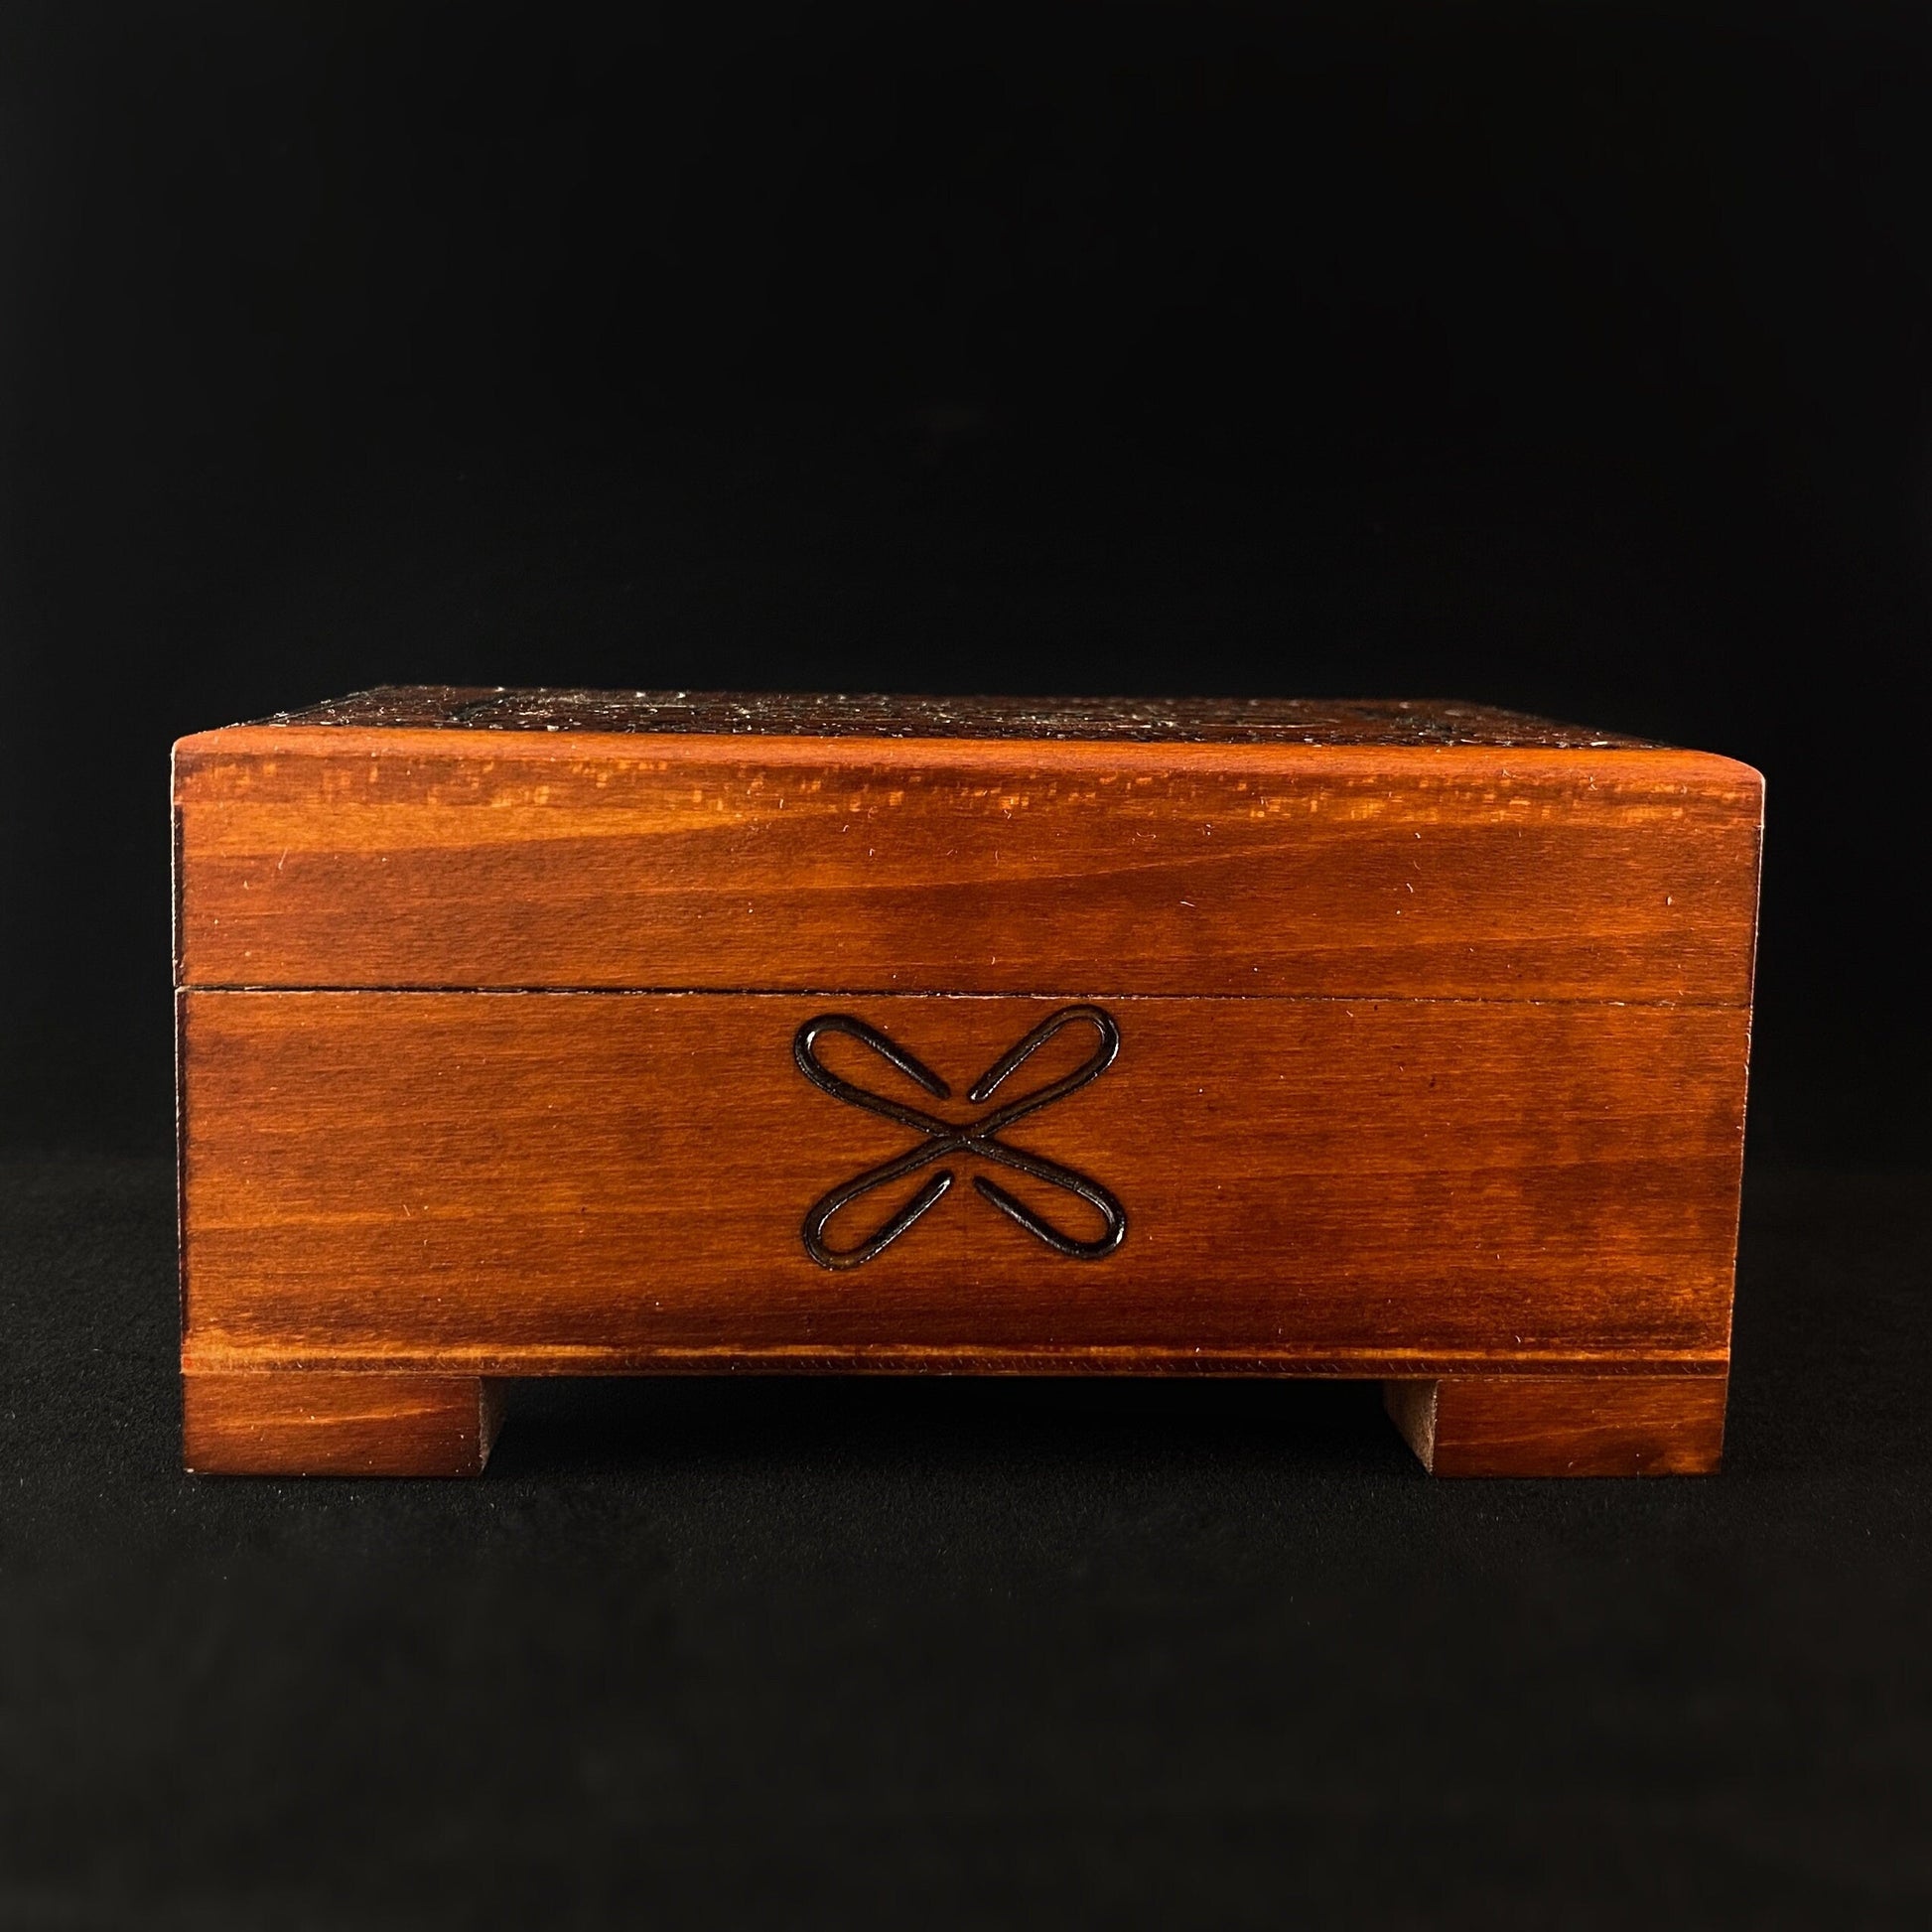 Celtic Patterned Top Jewelry Box, Handmade Hinged Wooden Treasure Box